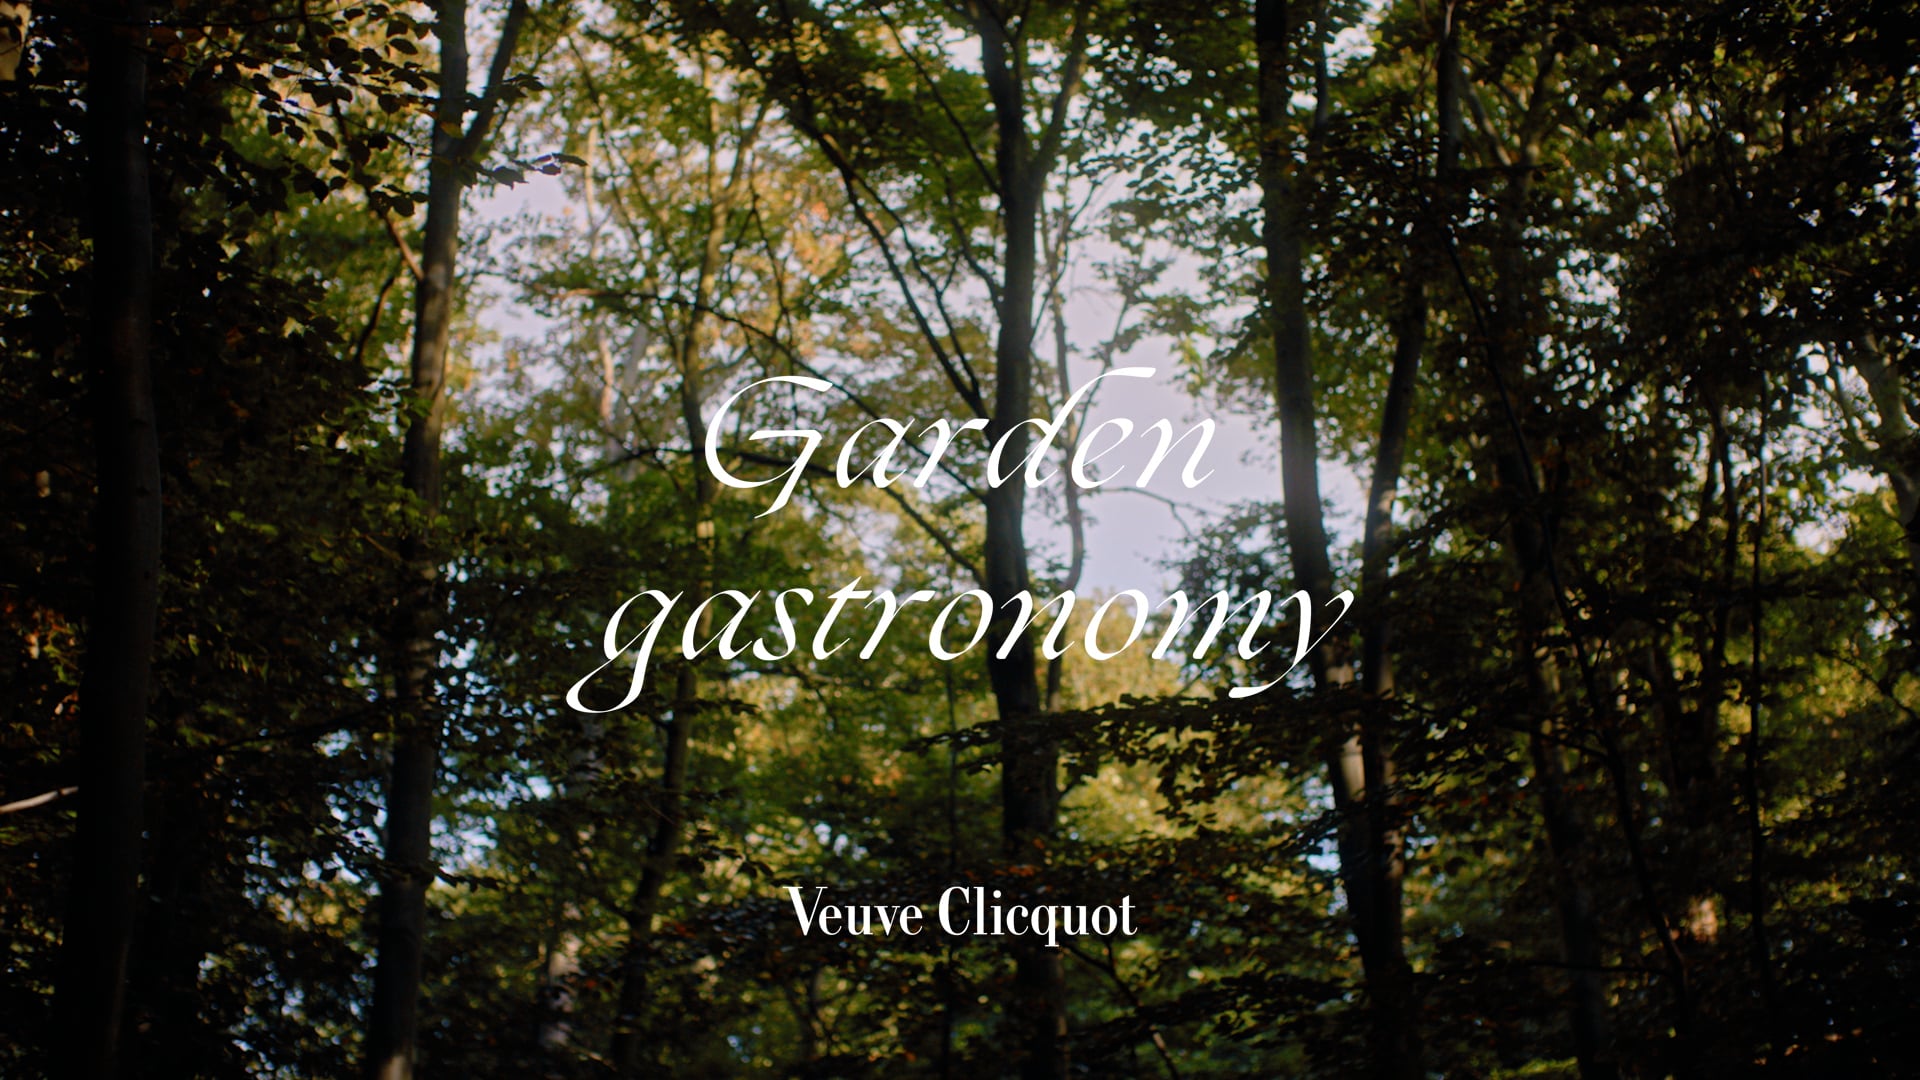 Veuve Clicquot x Garden Gastronomy - Director's Cut